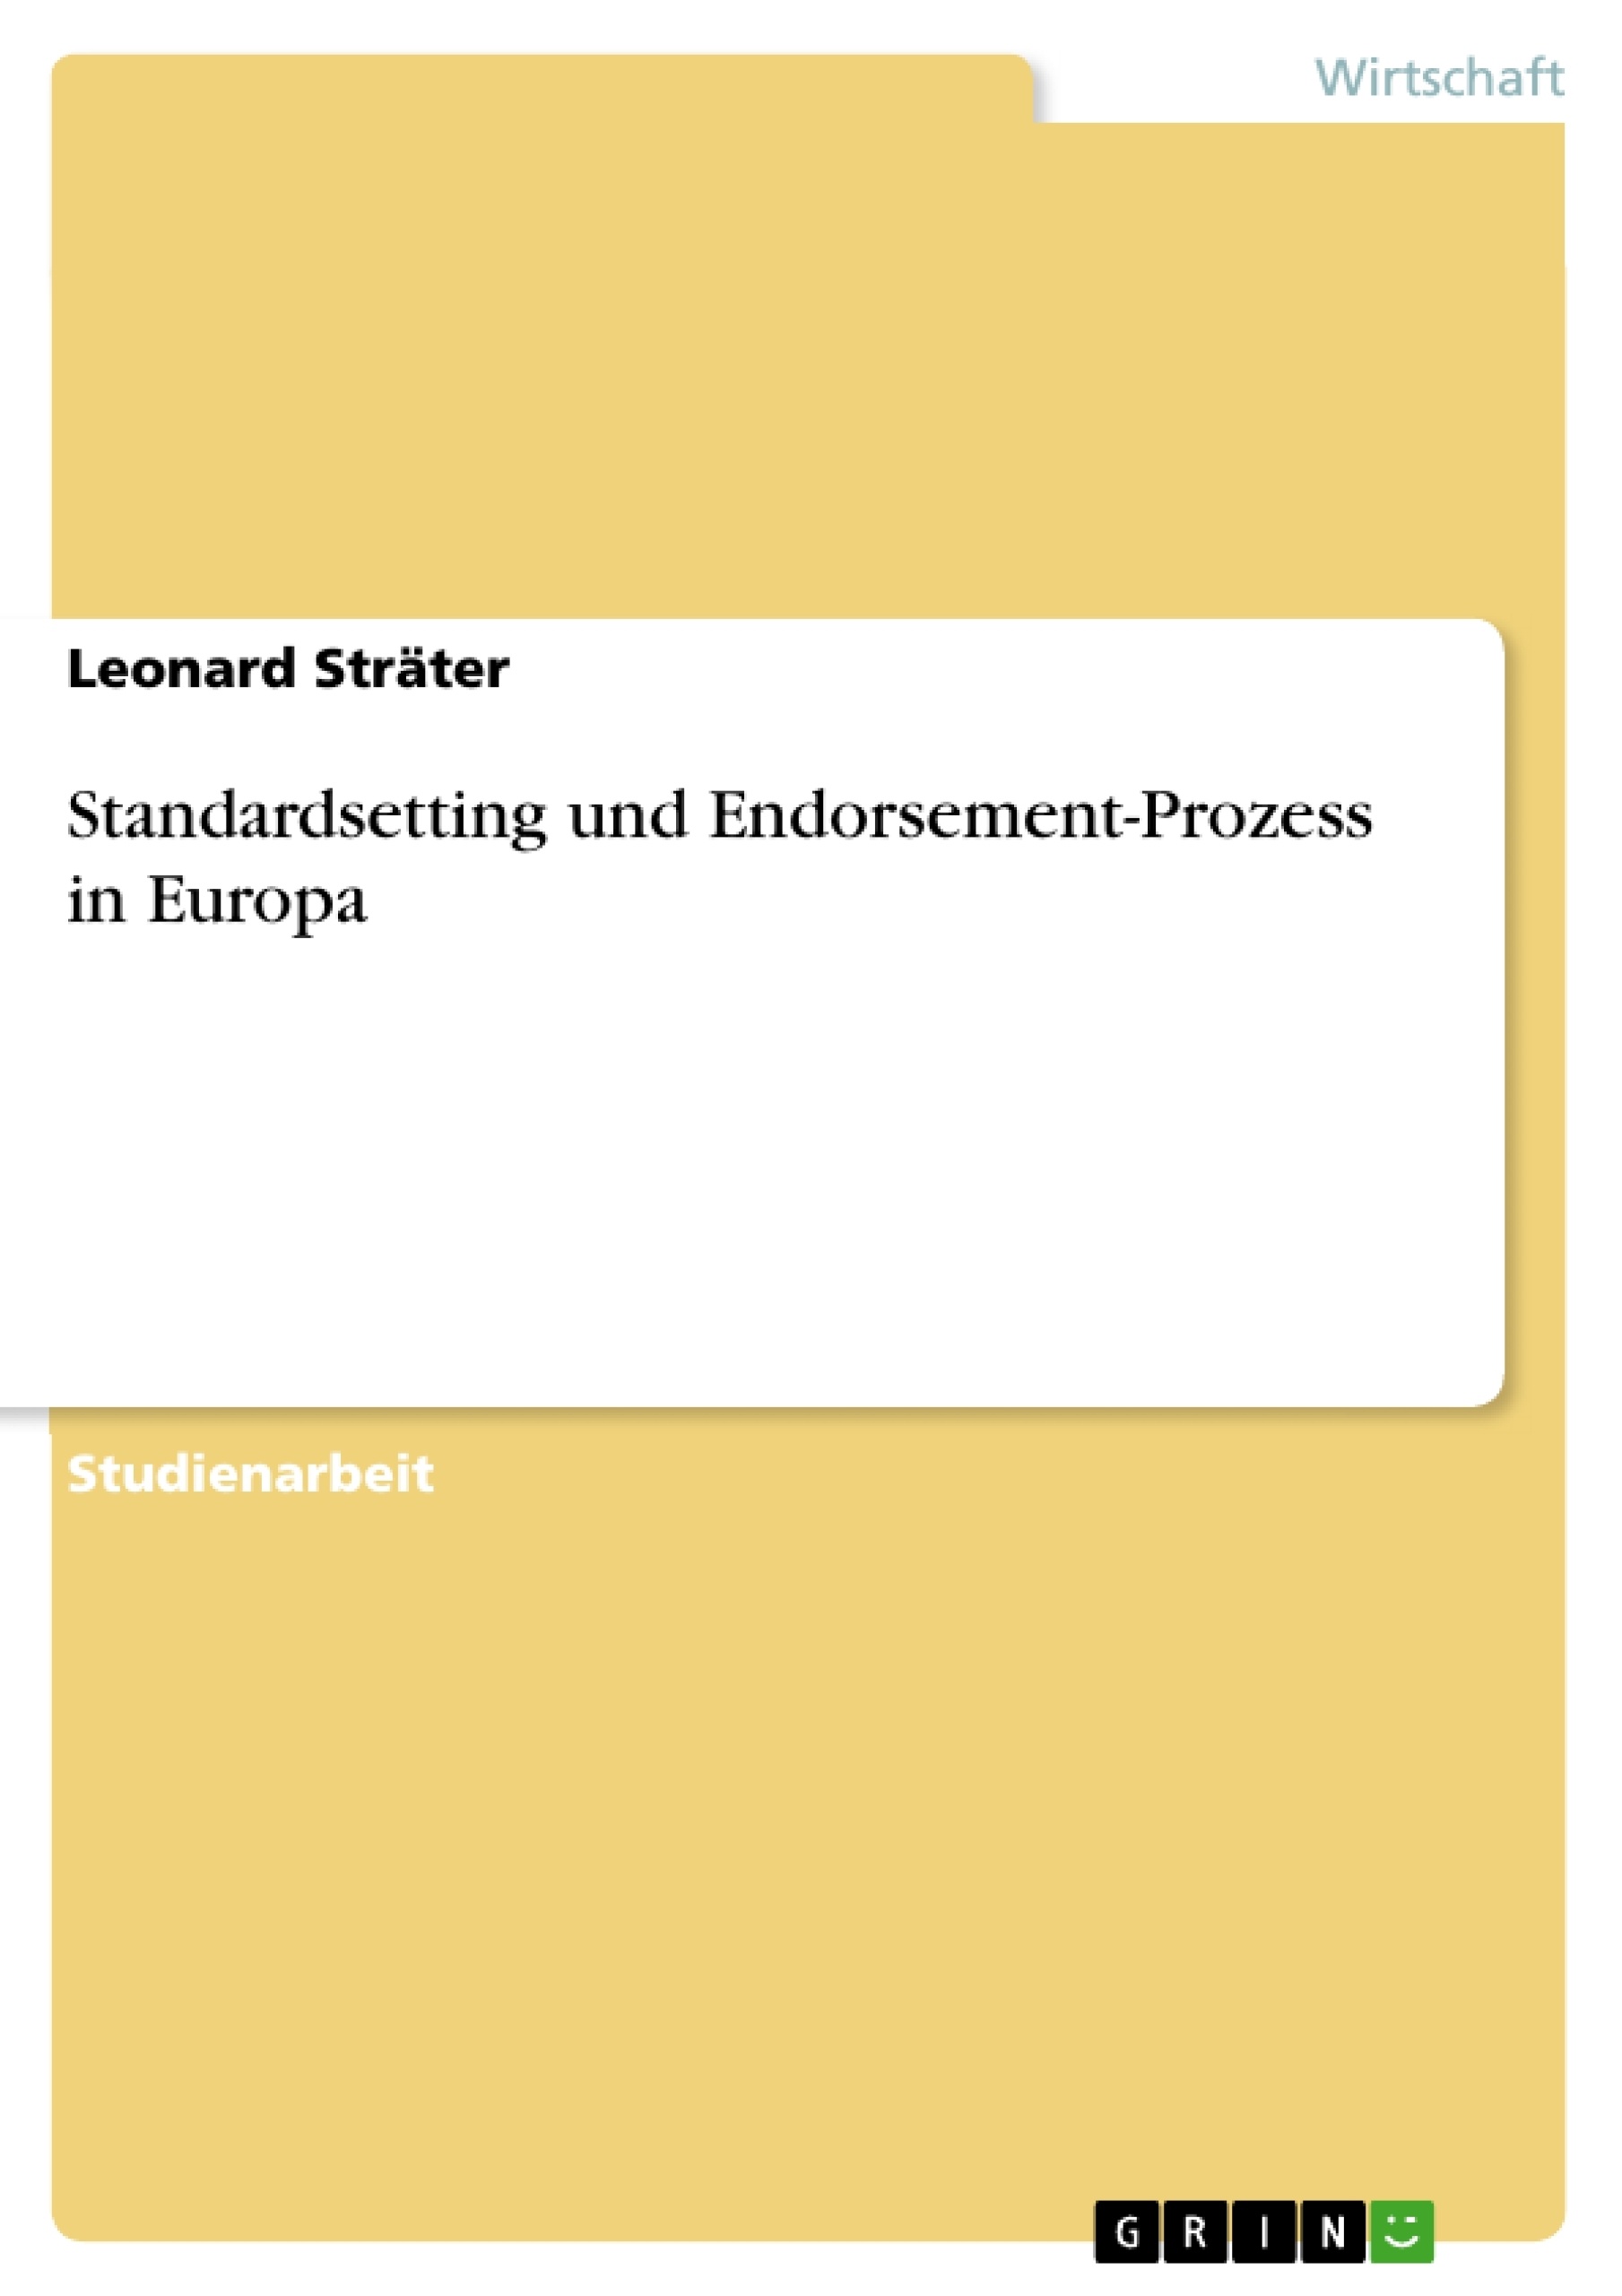 Título: Standardsetting und Endorsement-Prozess in Europa